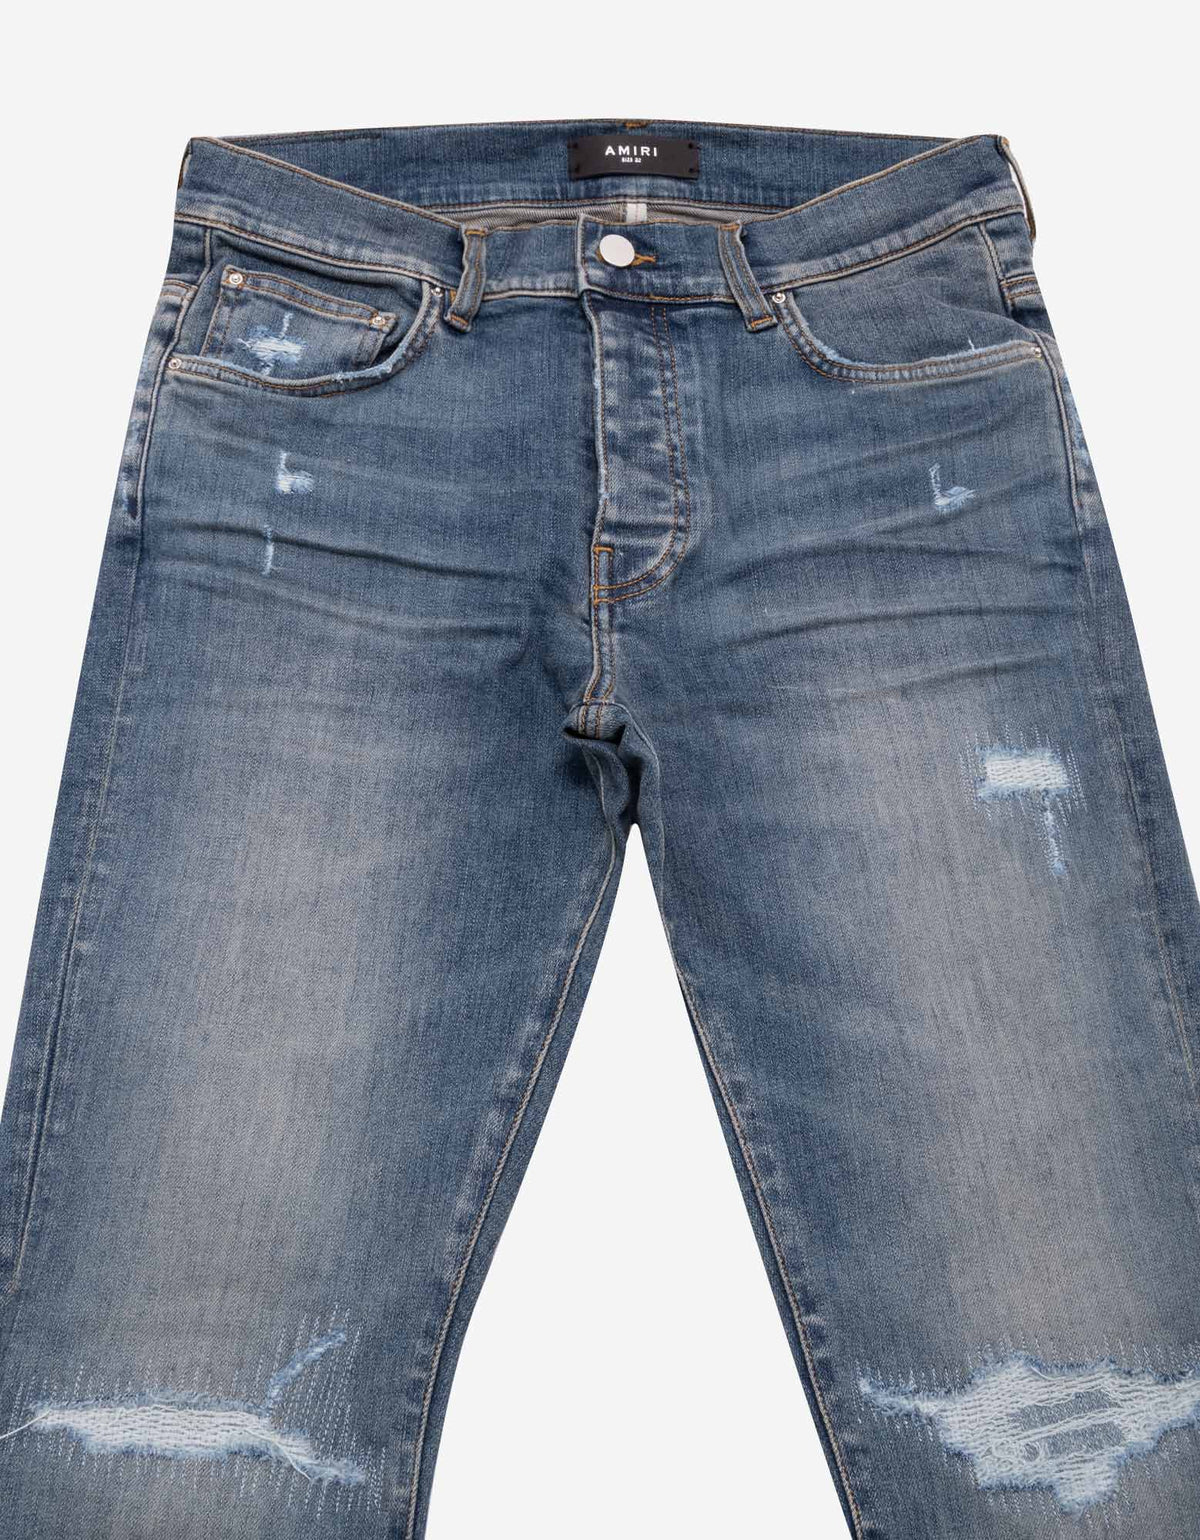 Amiri Fractured Blue Skinny Jeans